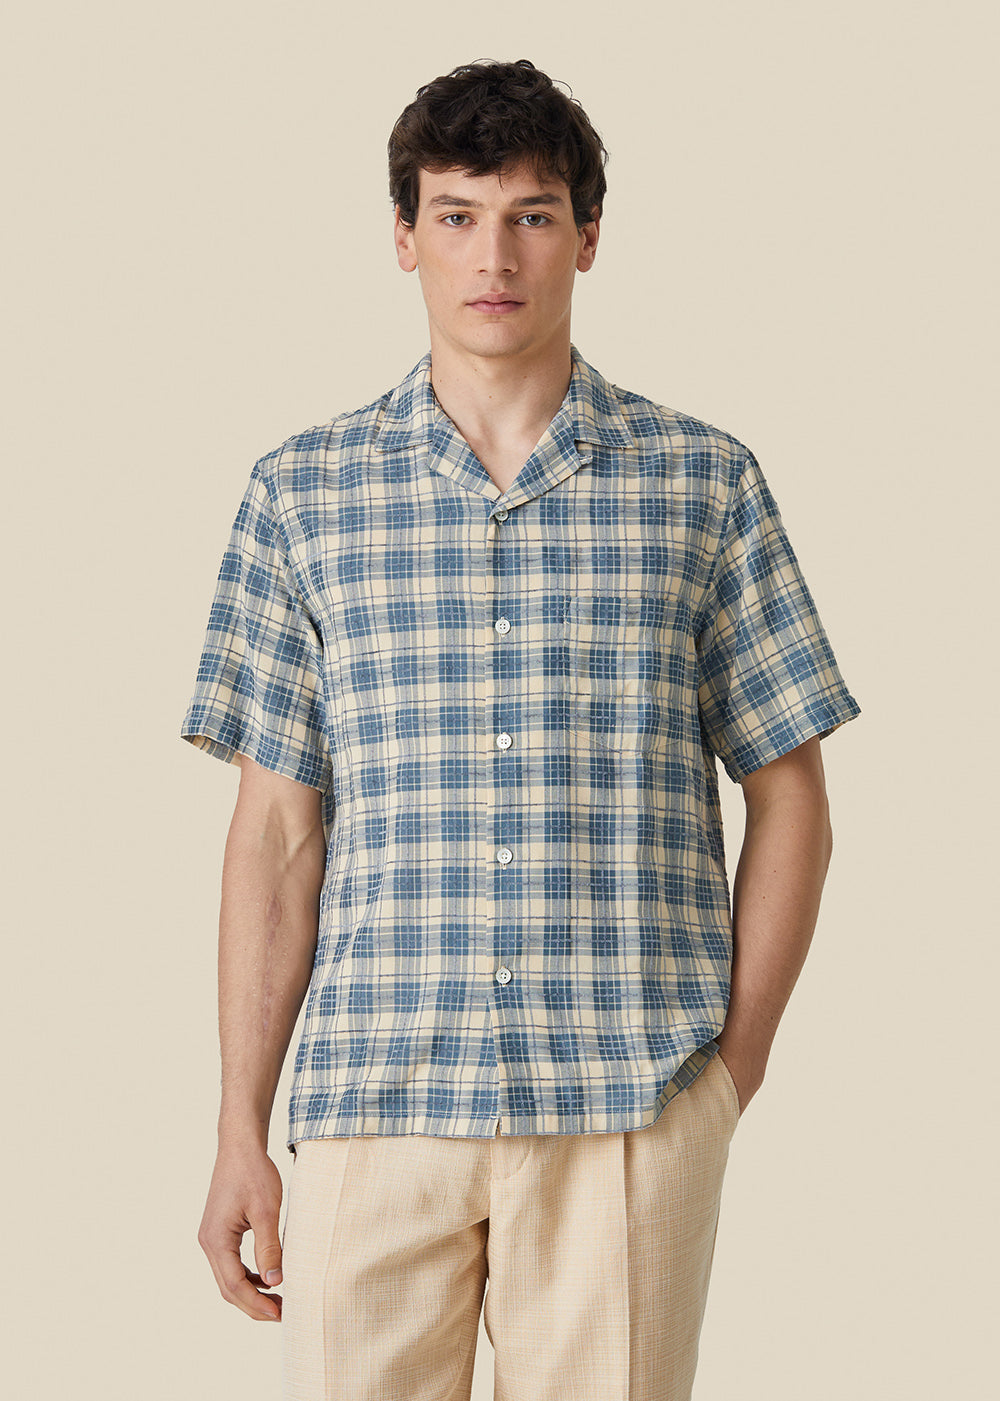 Trail Shirt - Blue - Portuguese Flannel Canada - Danali